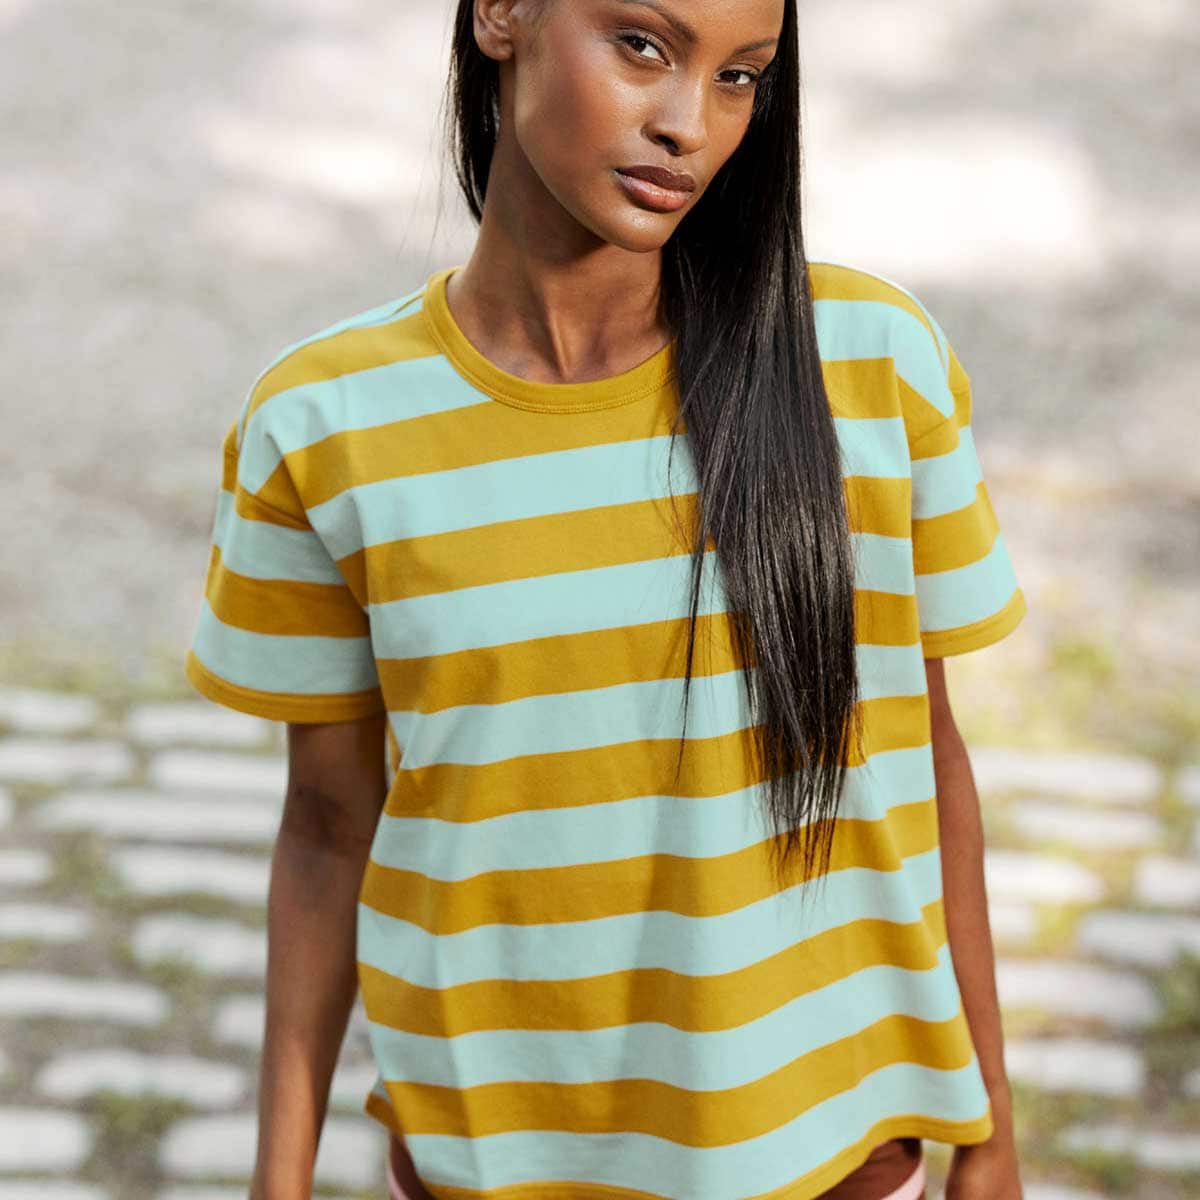 AWOC Woman T-shirt, short sleeve, mustard/turquoise